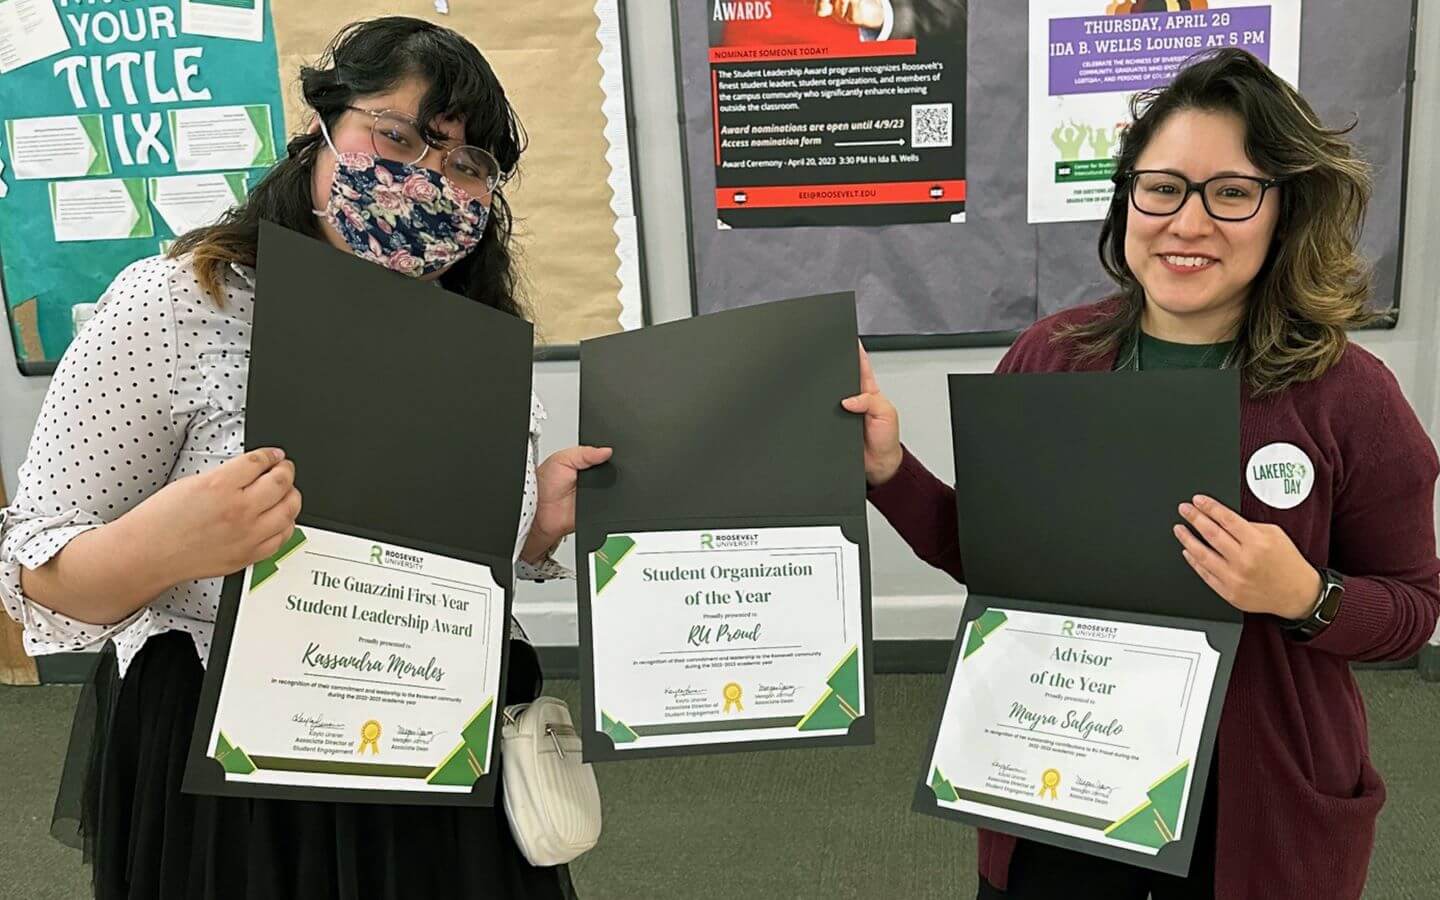 Advisor, Mayra Salgado and student hold award certificates from RU Proud organization.